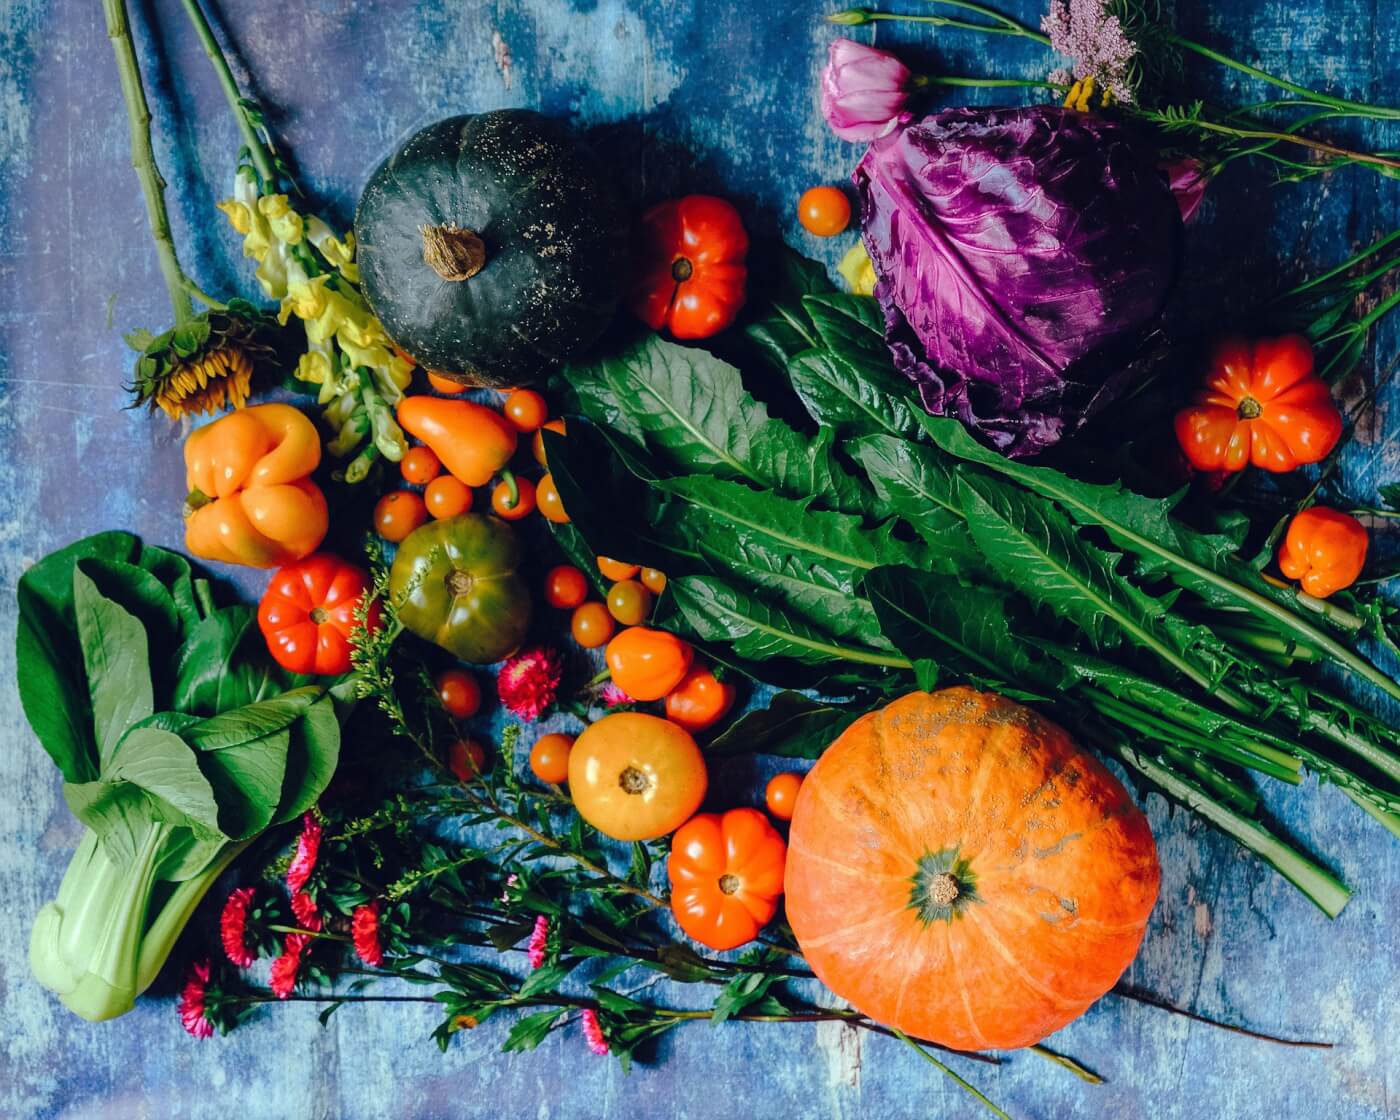 colorful fresh produce